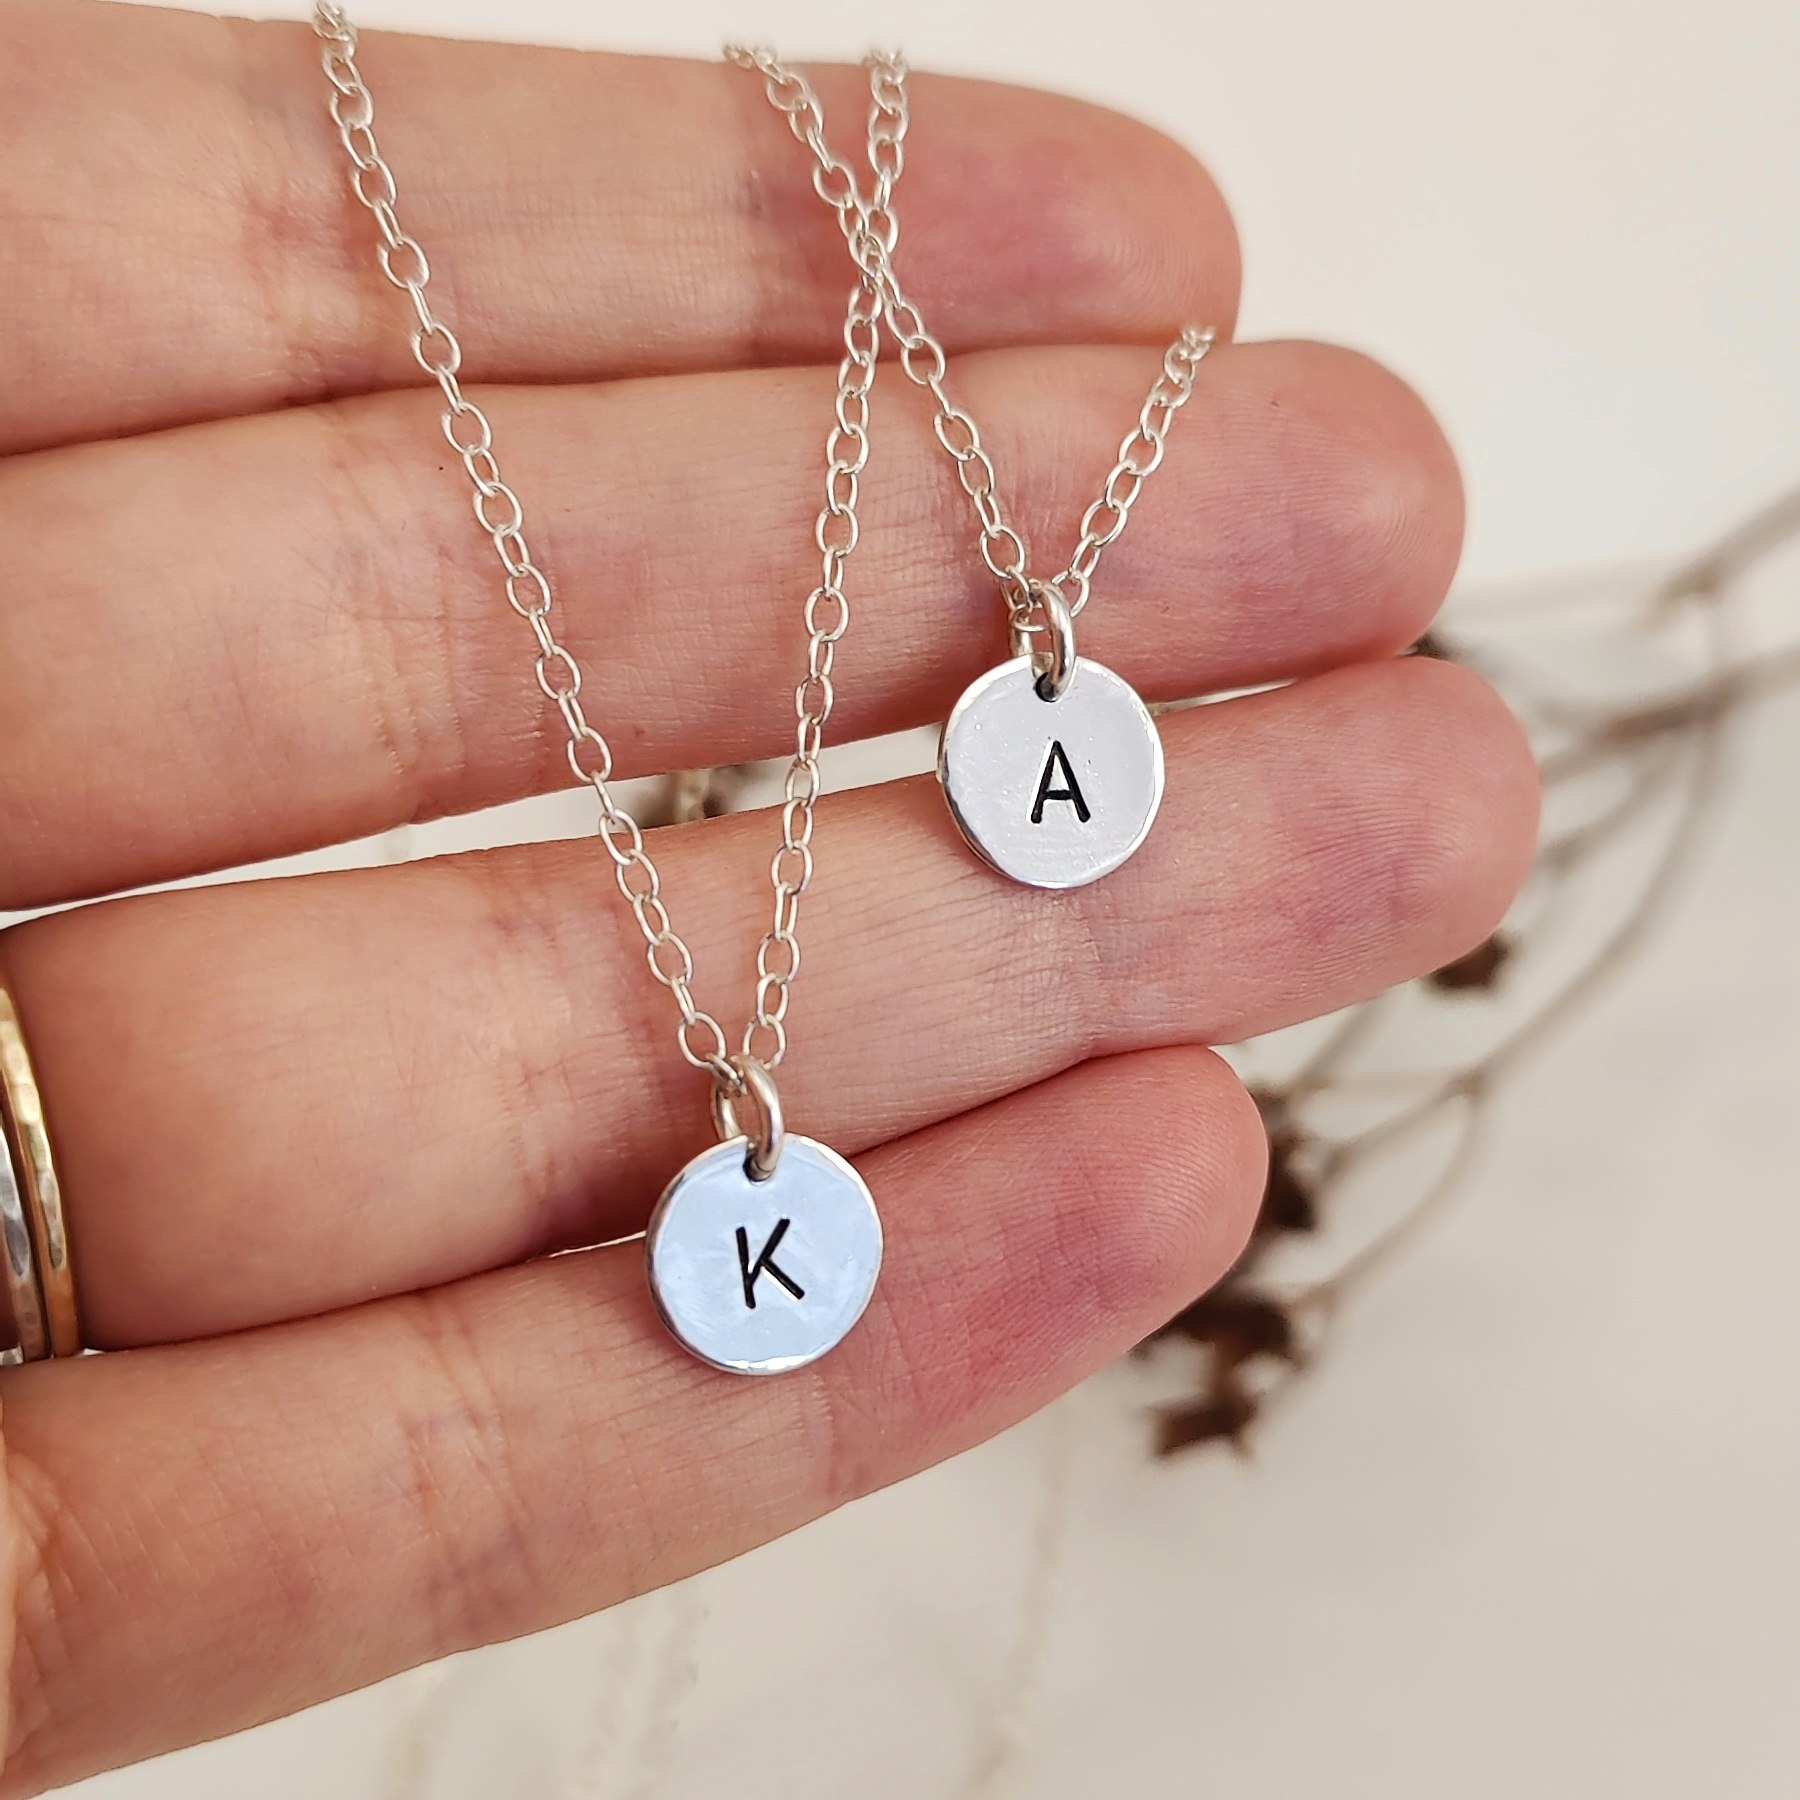 K Necklace Letter Silver - Shop on Pinterest